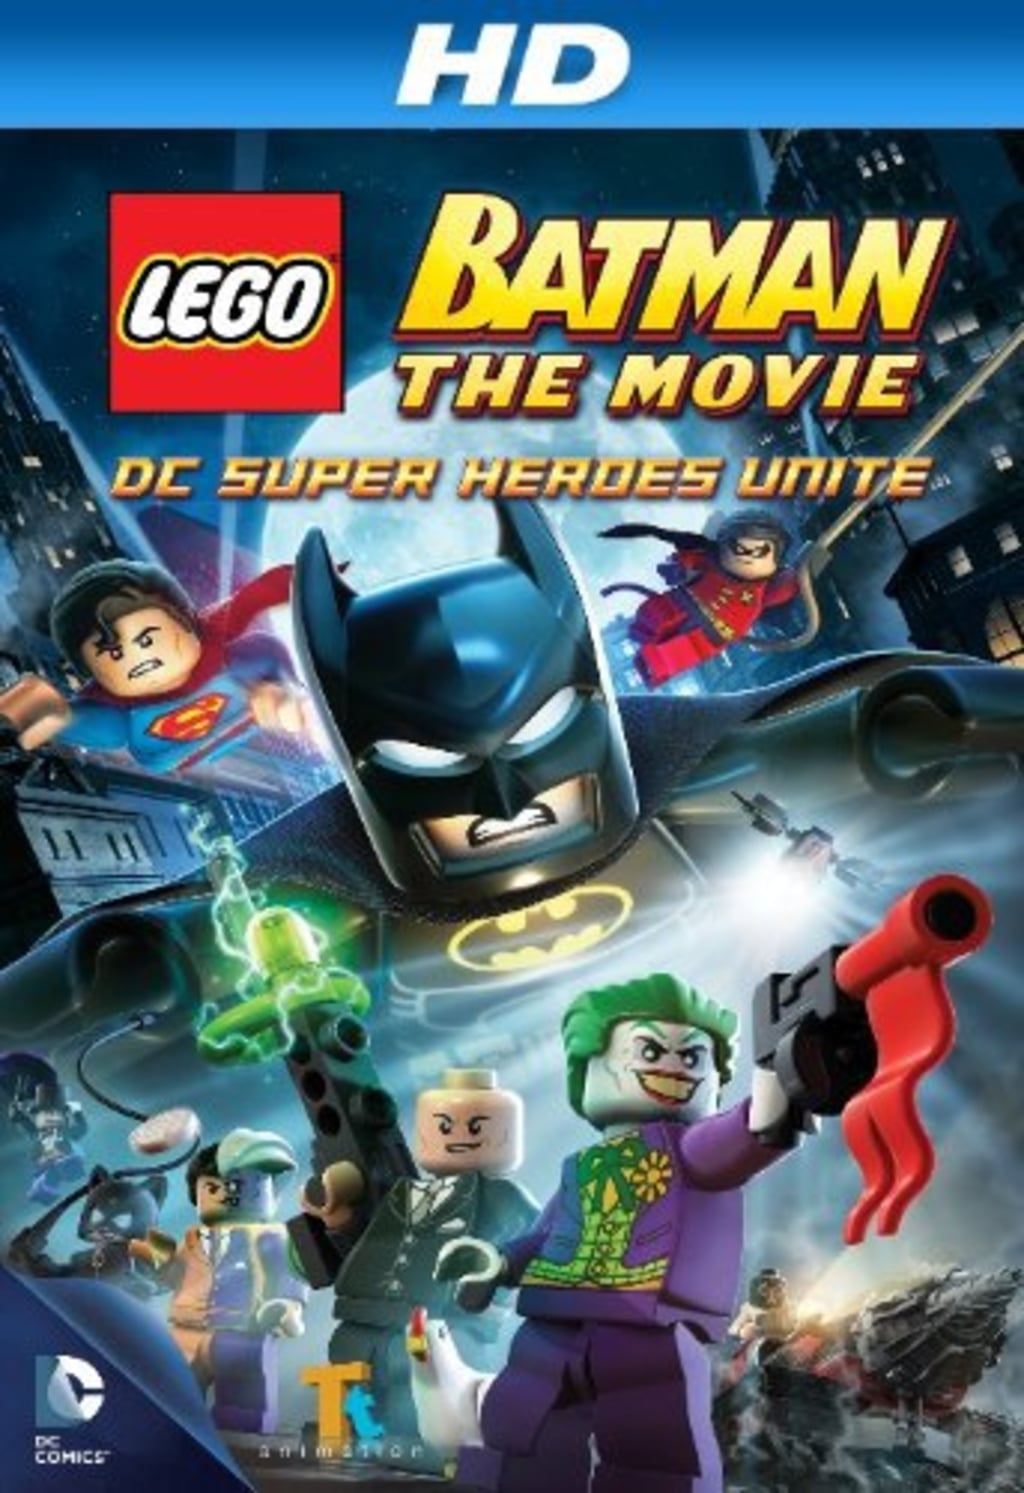 Watch LEGO Batman: The Movie - DC Super Heroes Unite on Netflix Today! |  